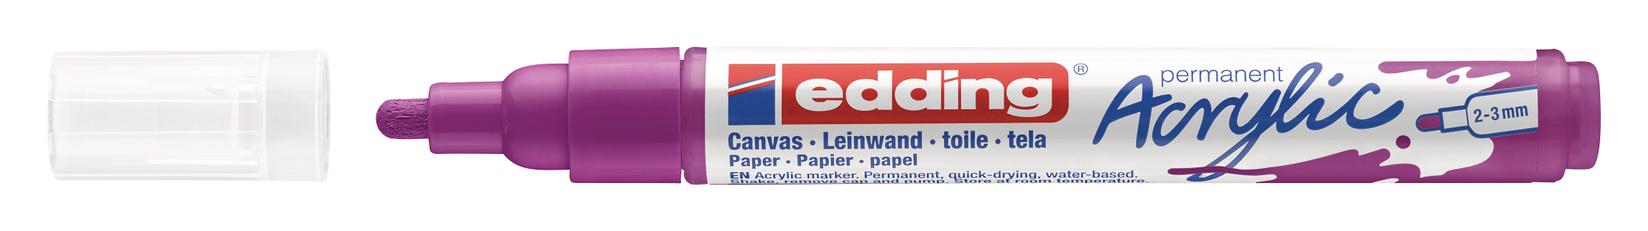 EDDING Akrilni marker medium 2-3mm obli vrh E-5100 borovnica